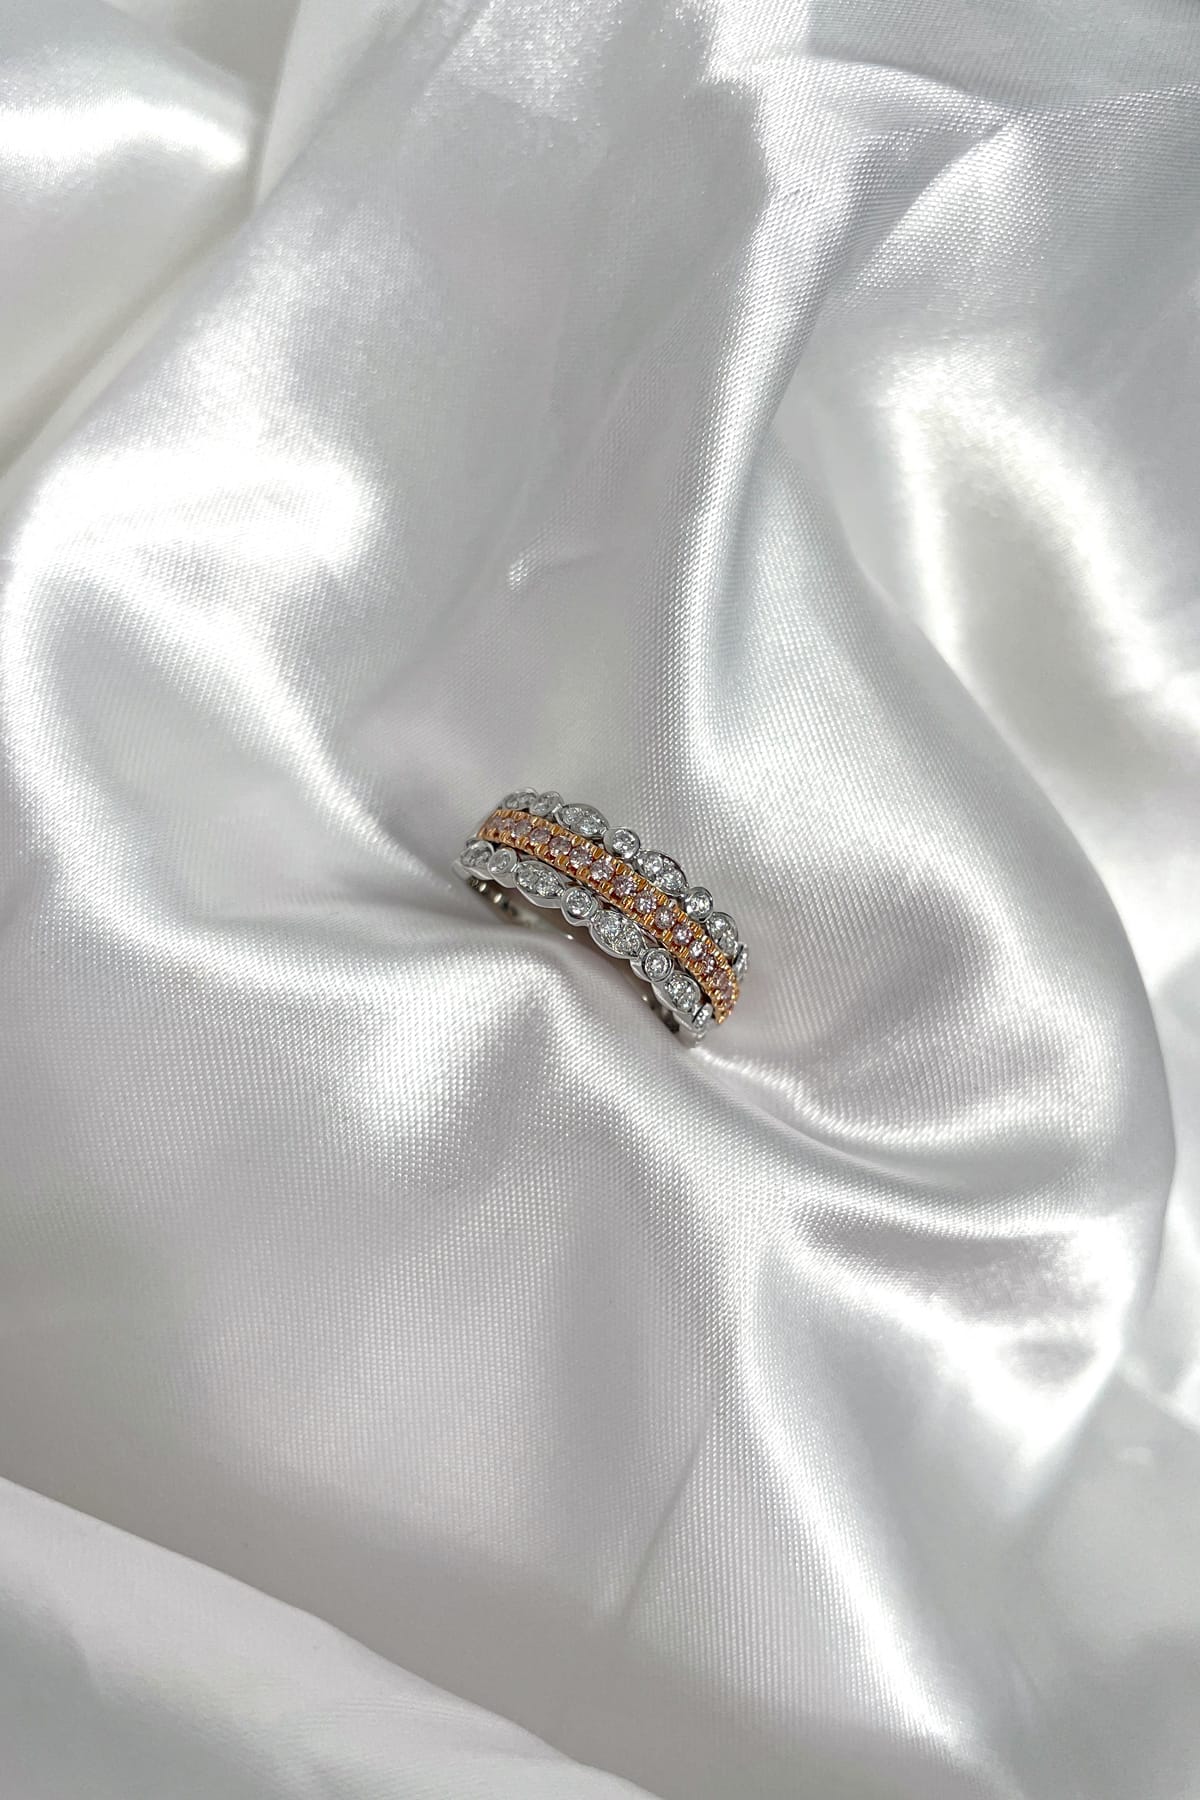 Natural Argyle Pink Diamond Dress Ring available at LeGassick Diamonds and Jewellery Gold Coast, Australia.